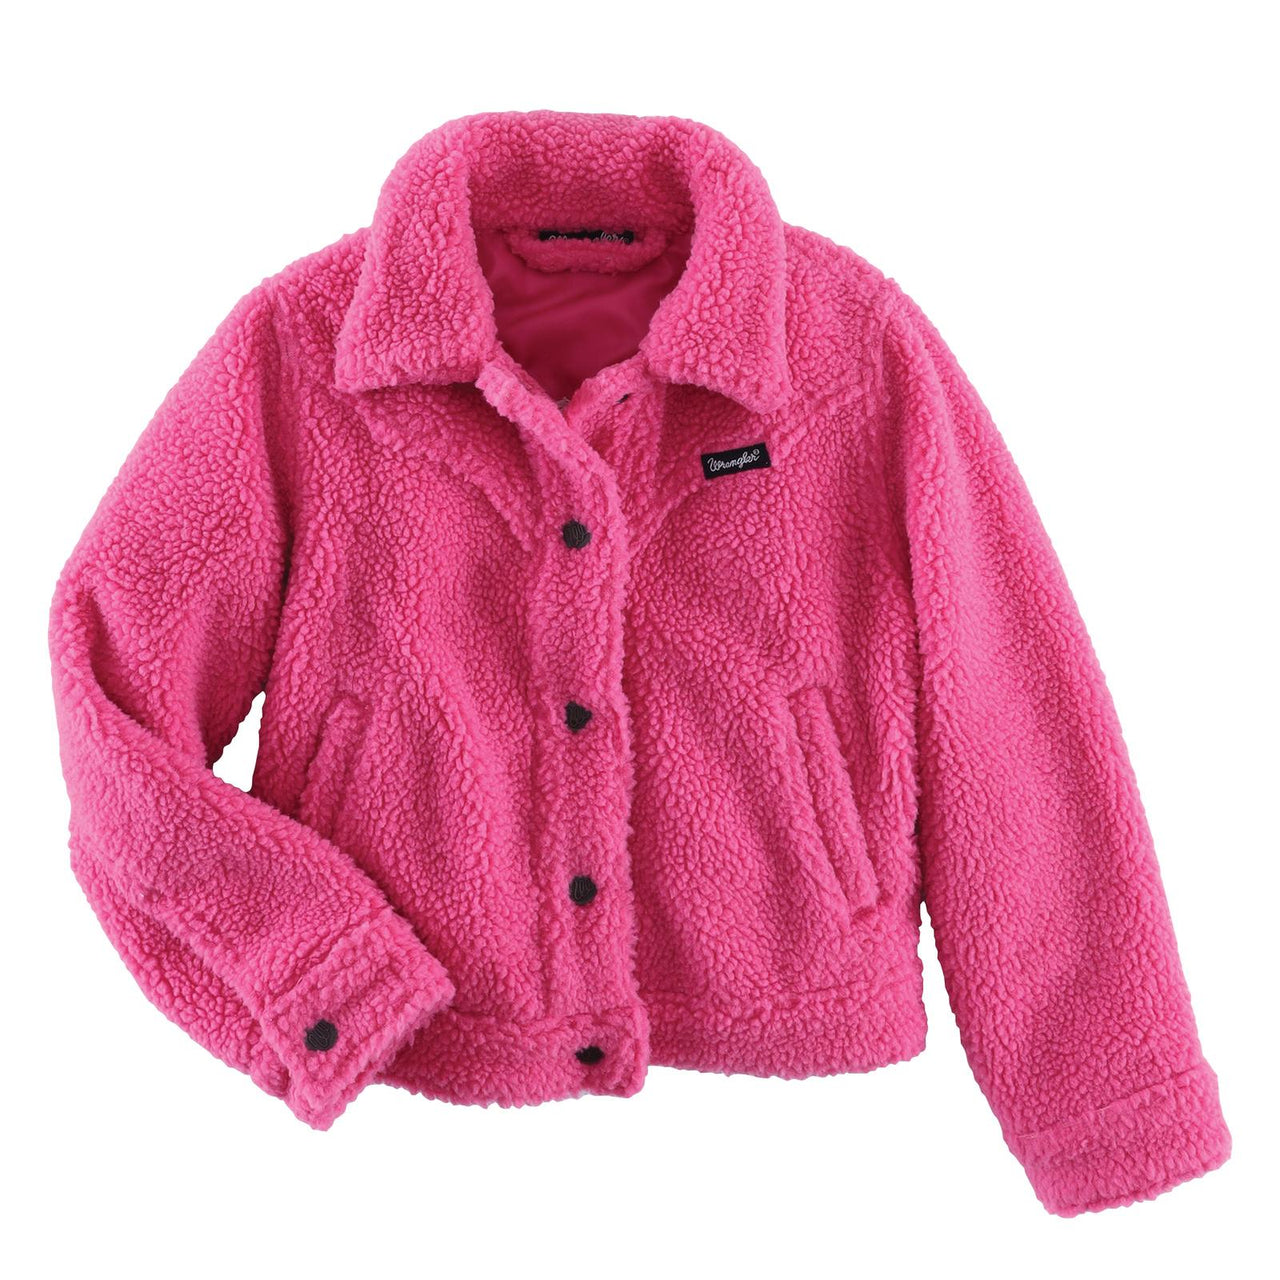 Wrangler Western Girl's Sherpa Jacket - Pink